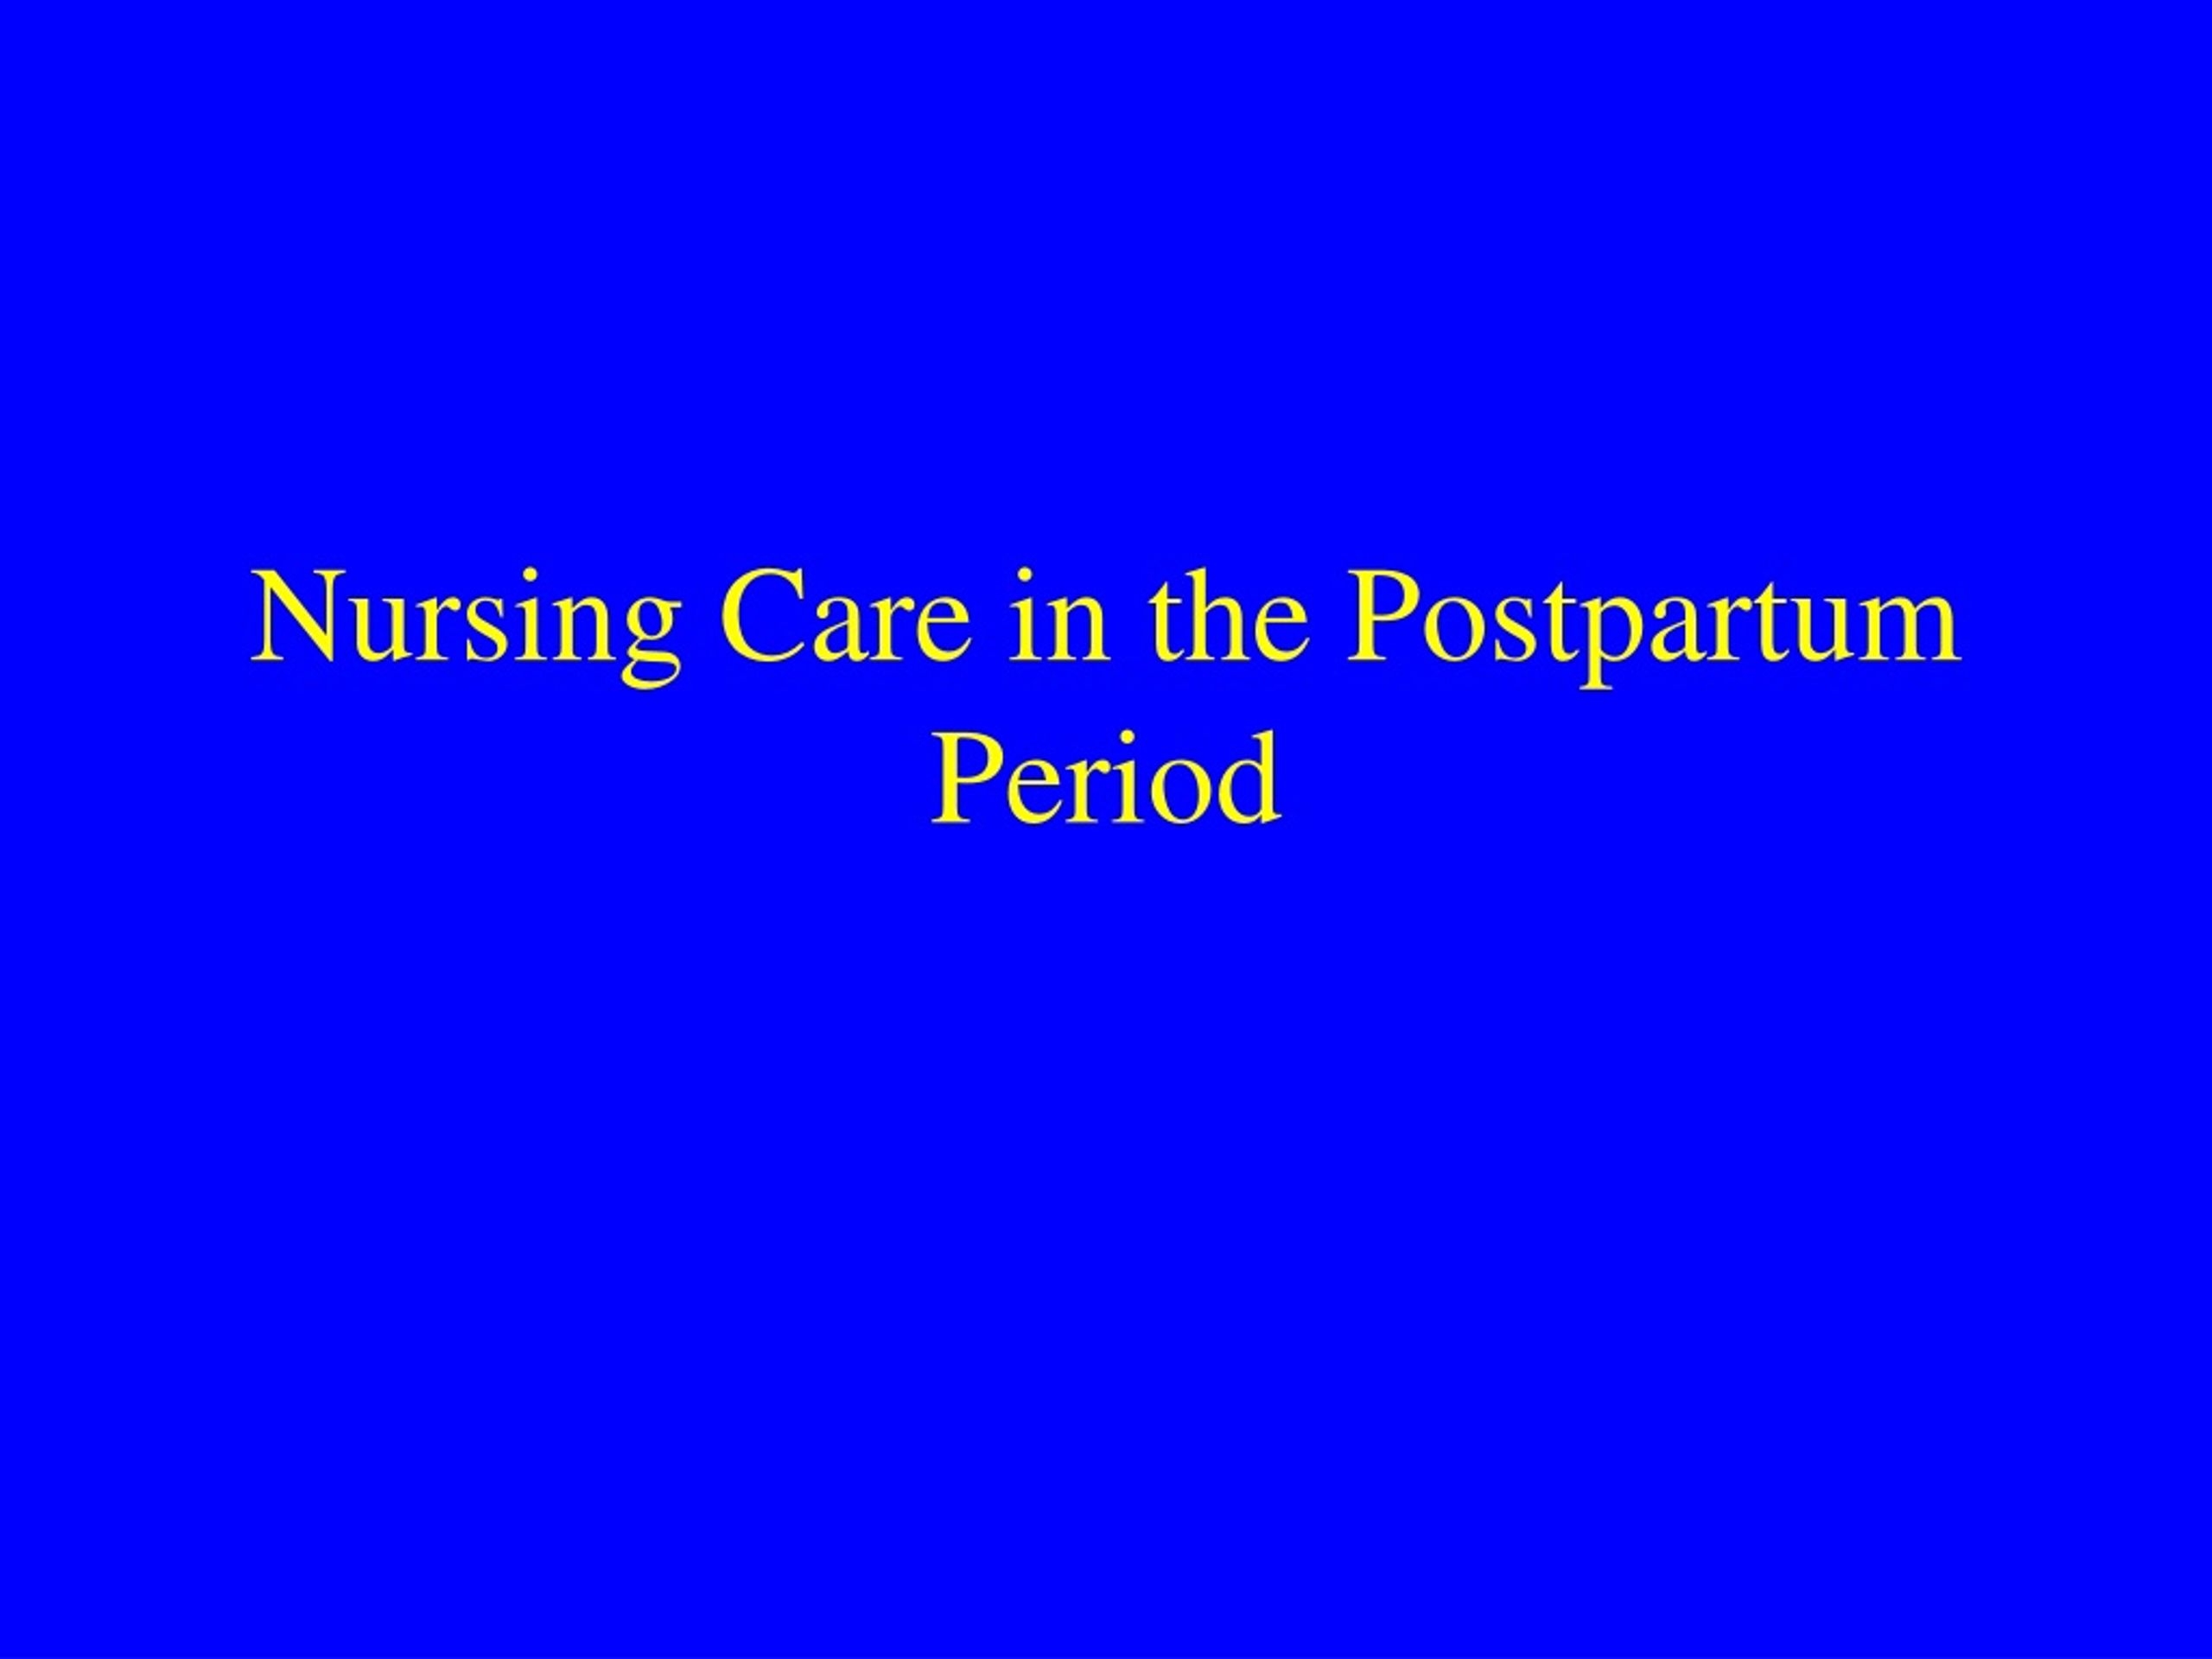 PPT - Nursing Care in the Postpartum Period PowerPoint